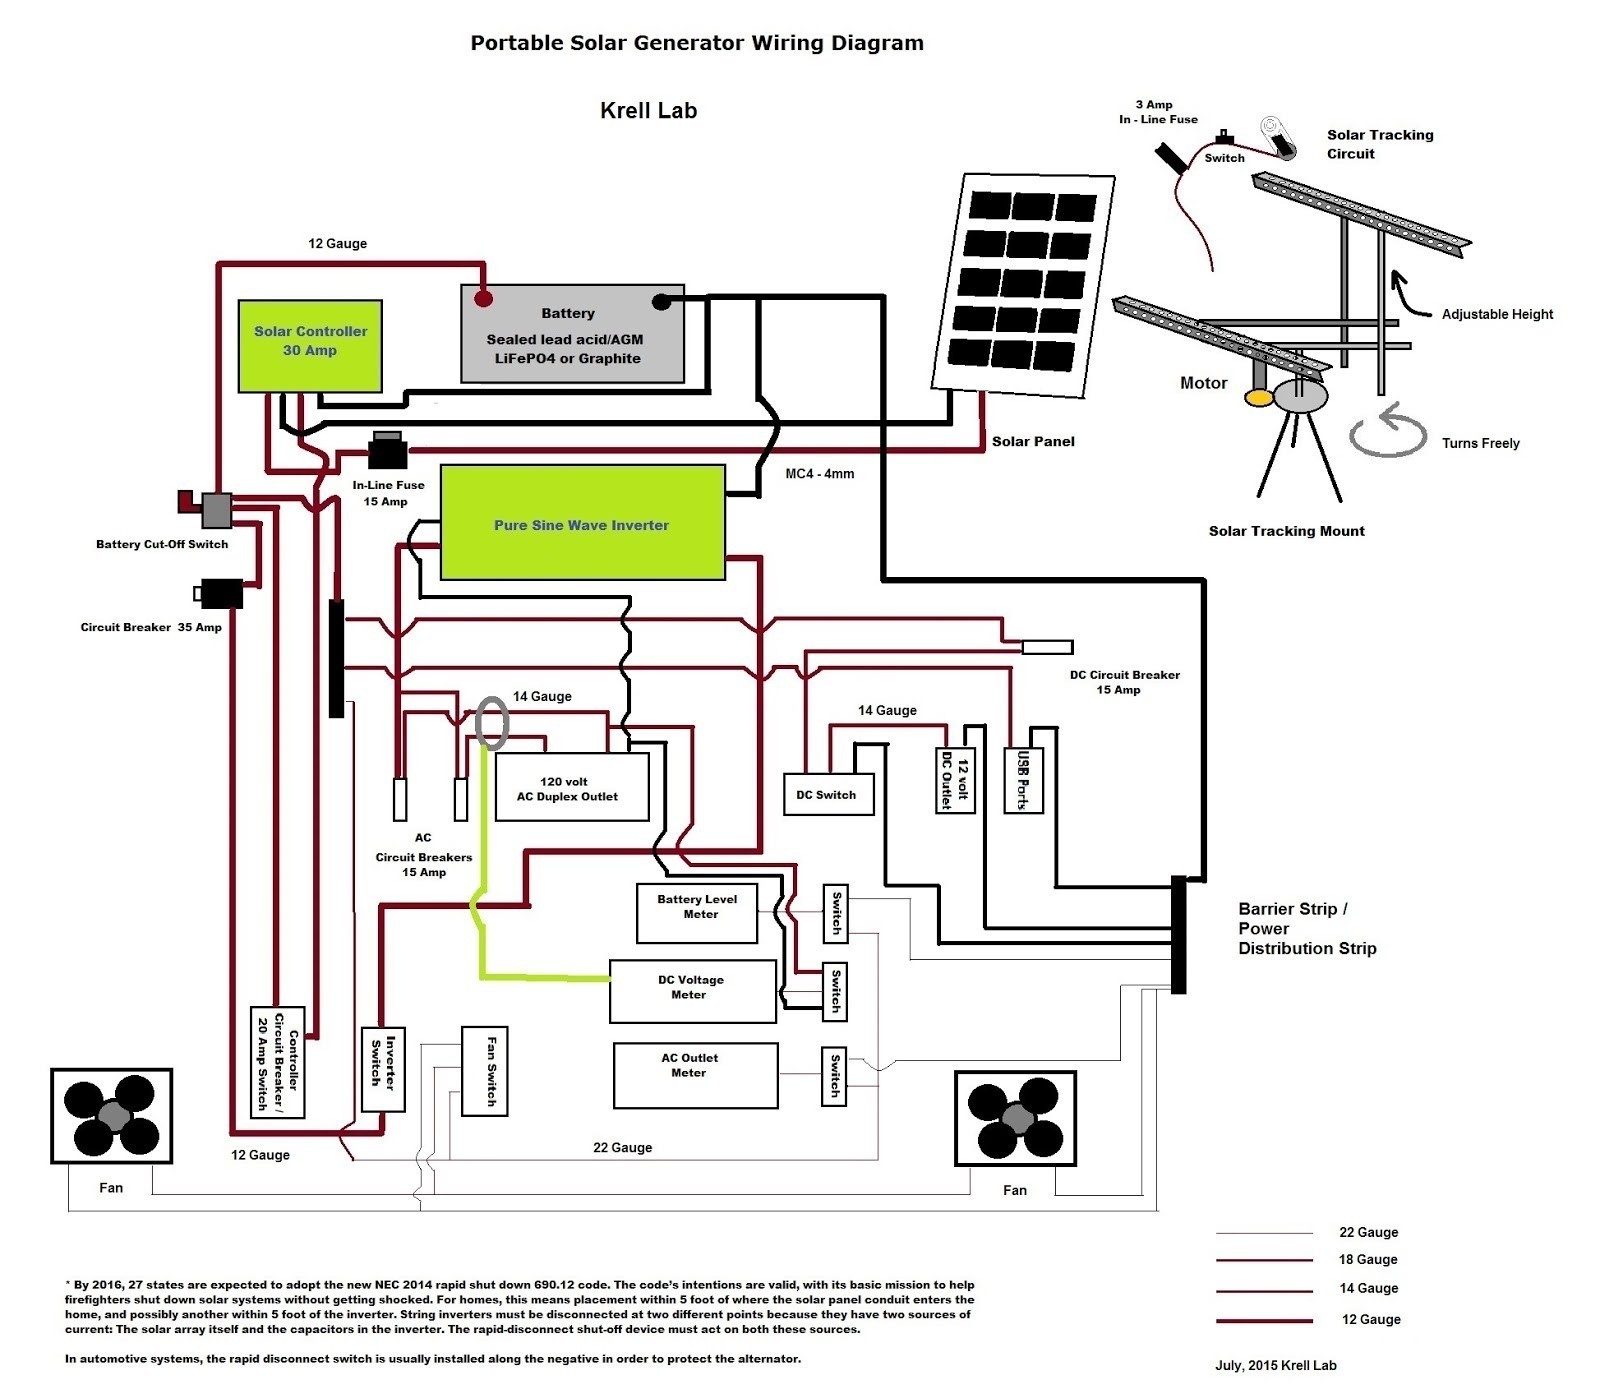 Panel Wiring Diagram Example New solar Panel Wiring Diagram Example Fresh the Krell Lab